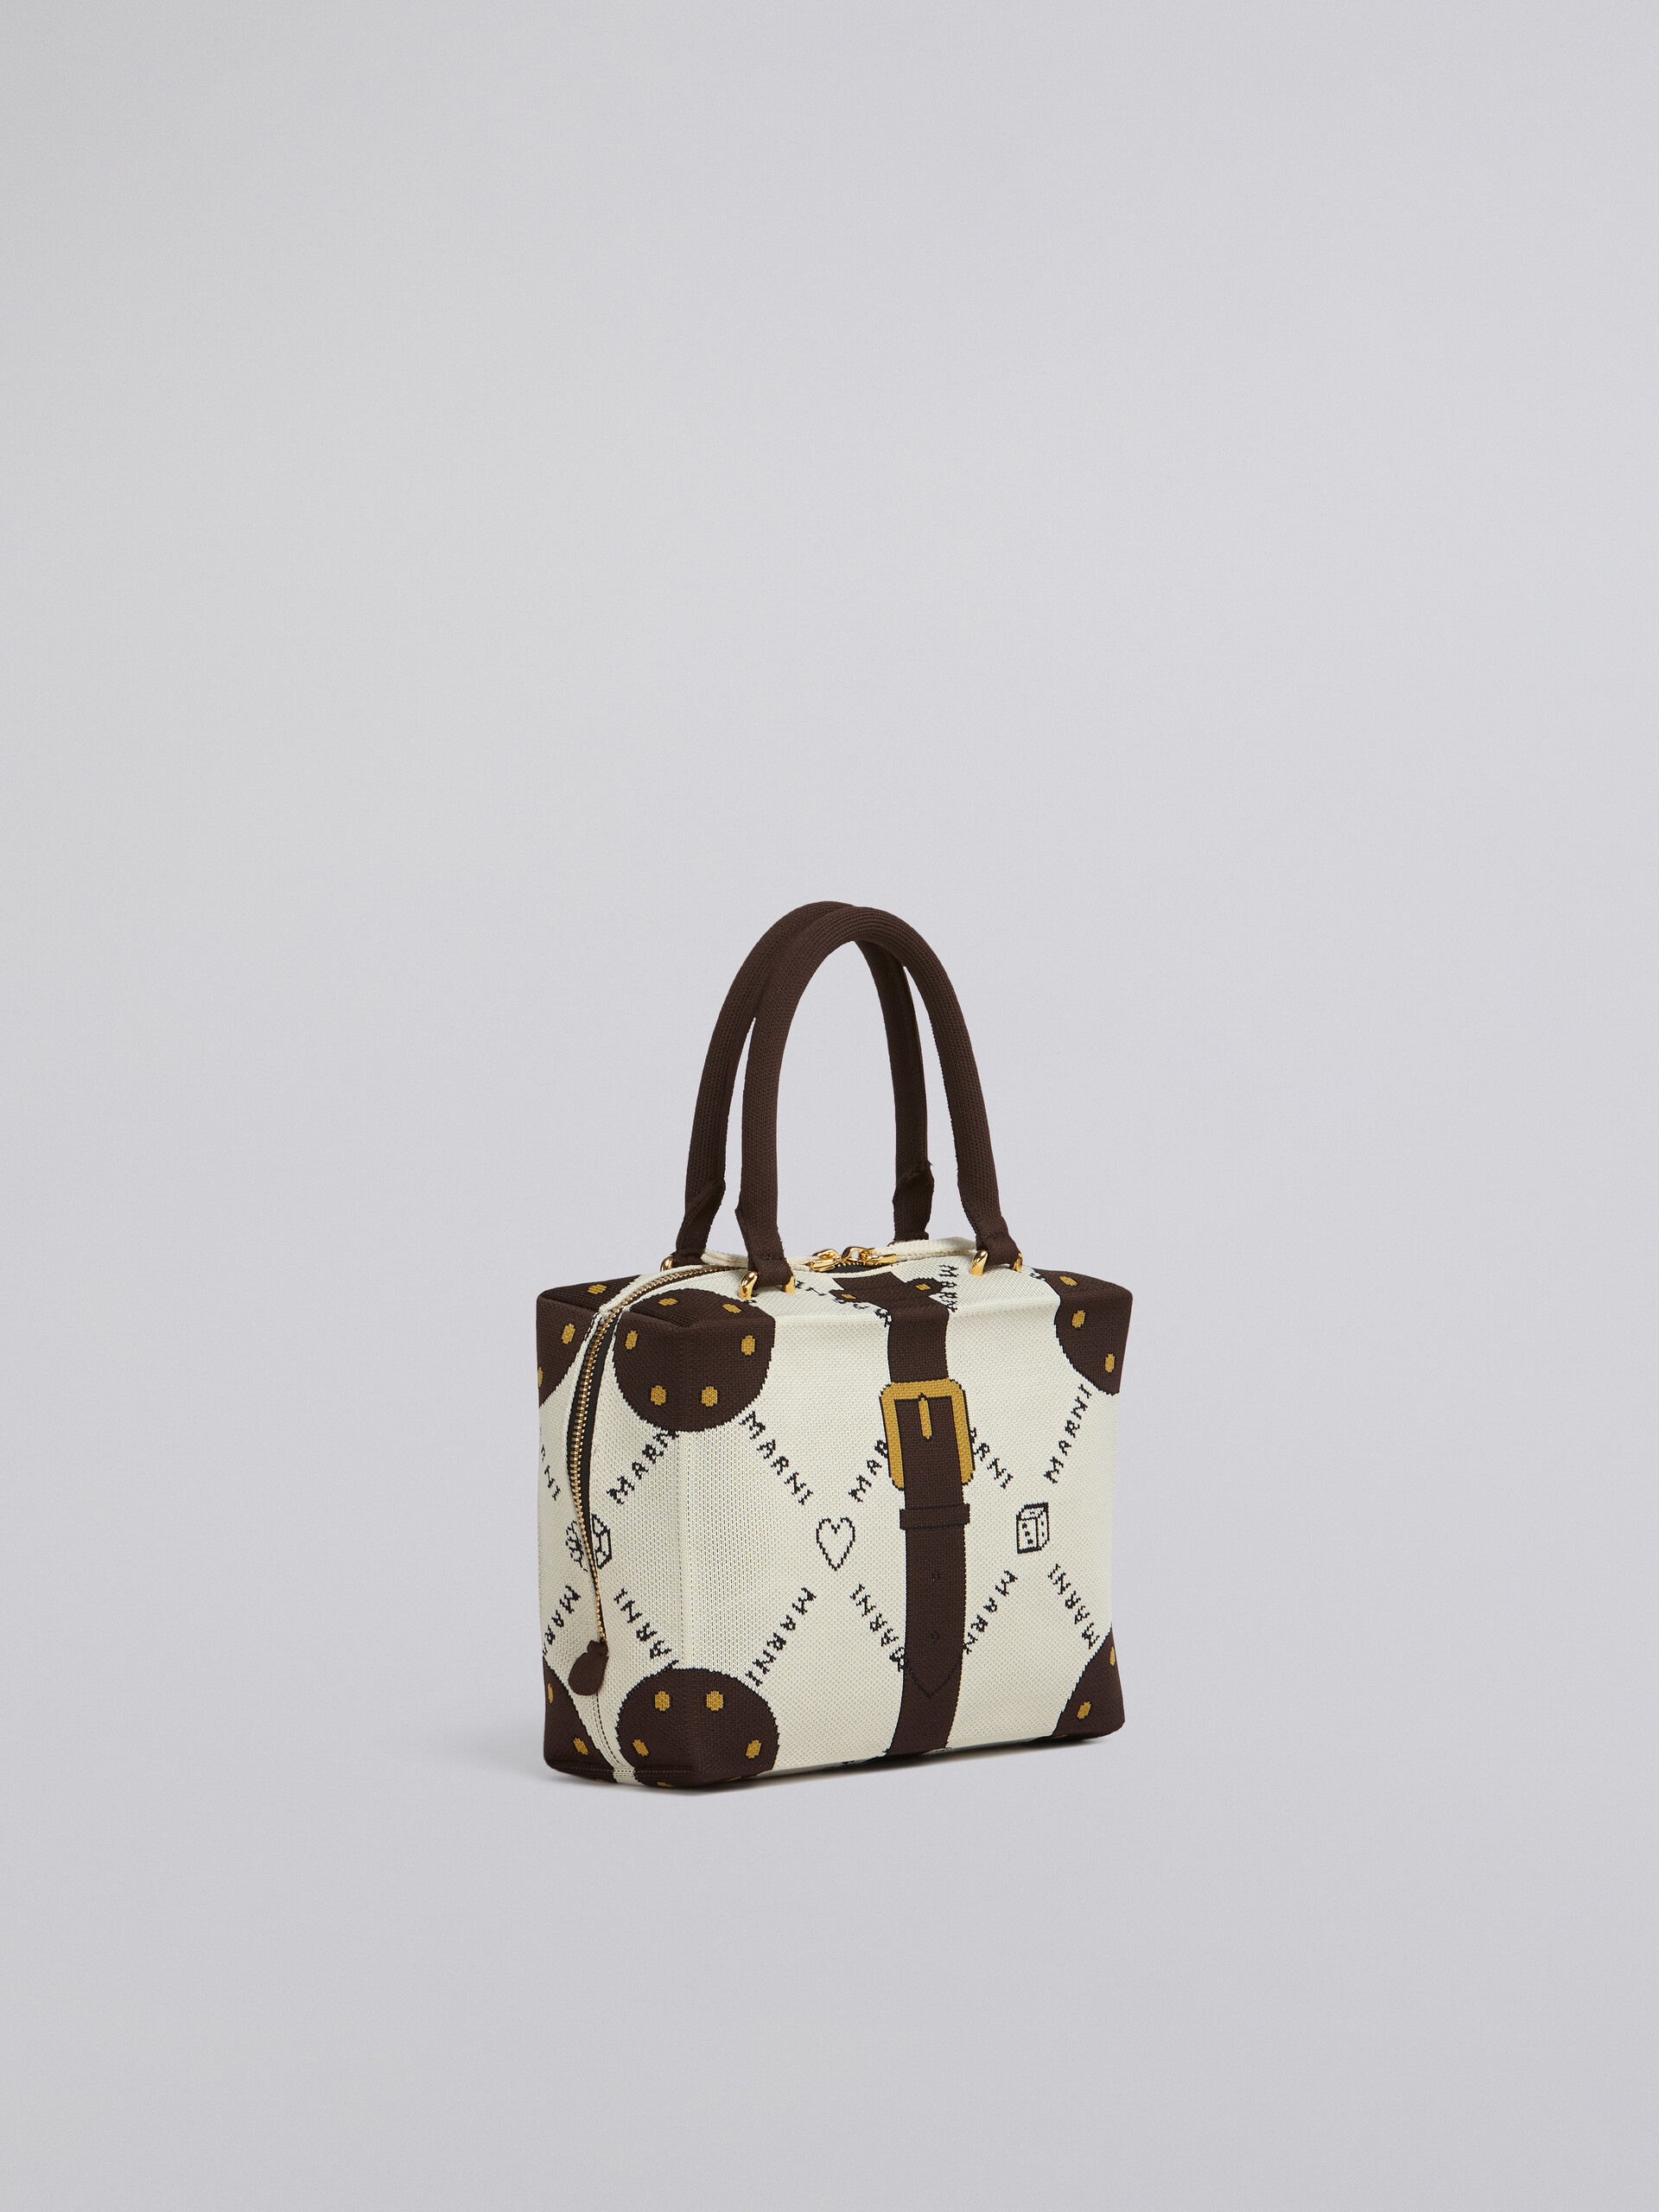 CUBIC bag in white Marnigram trompe-l'œil jacquard - Handbag - Image 6